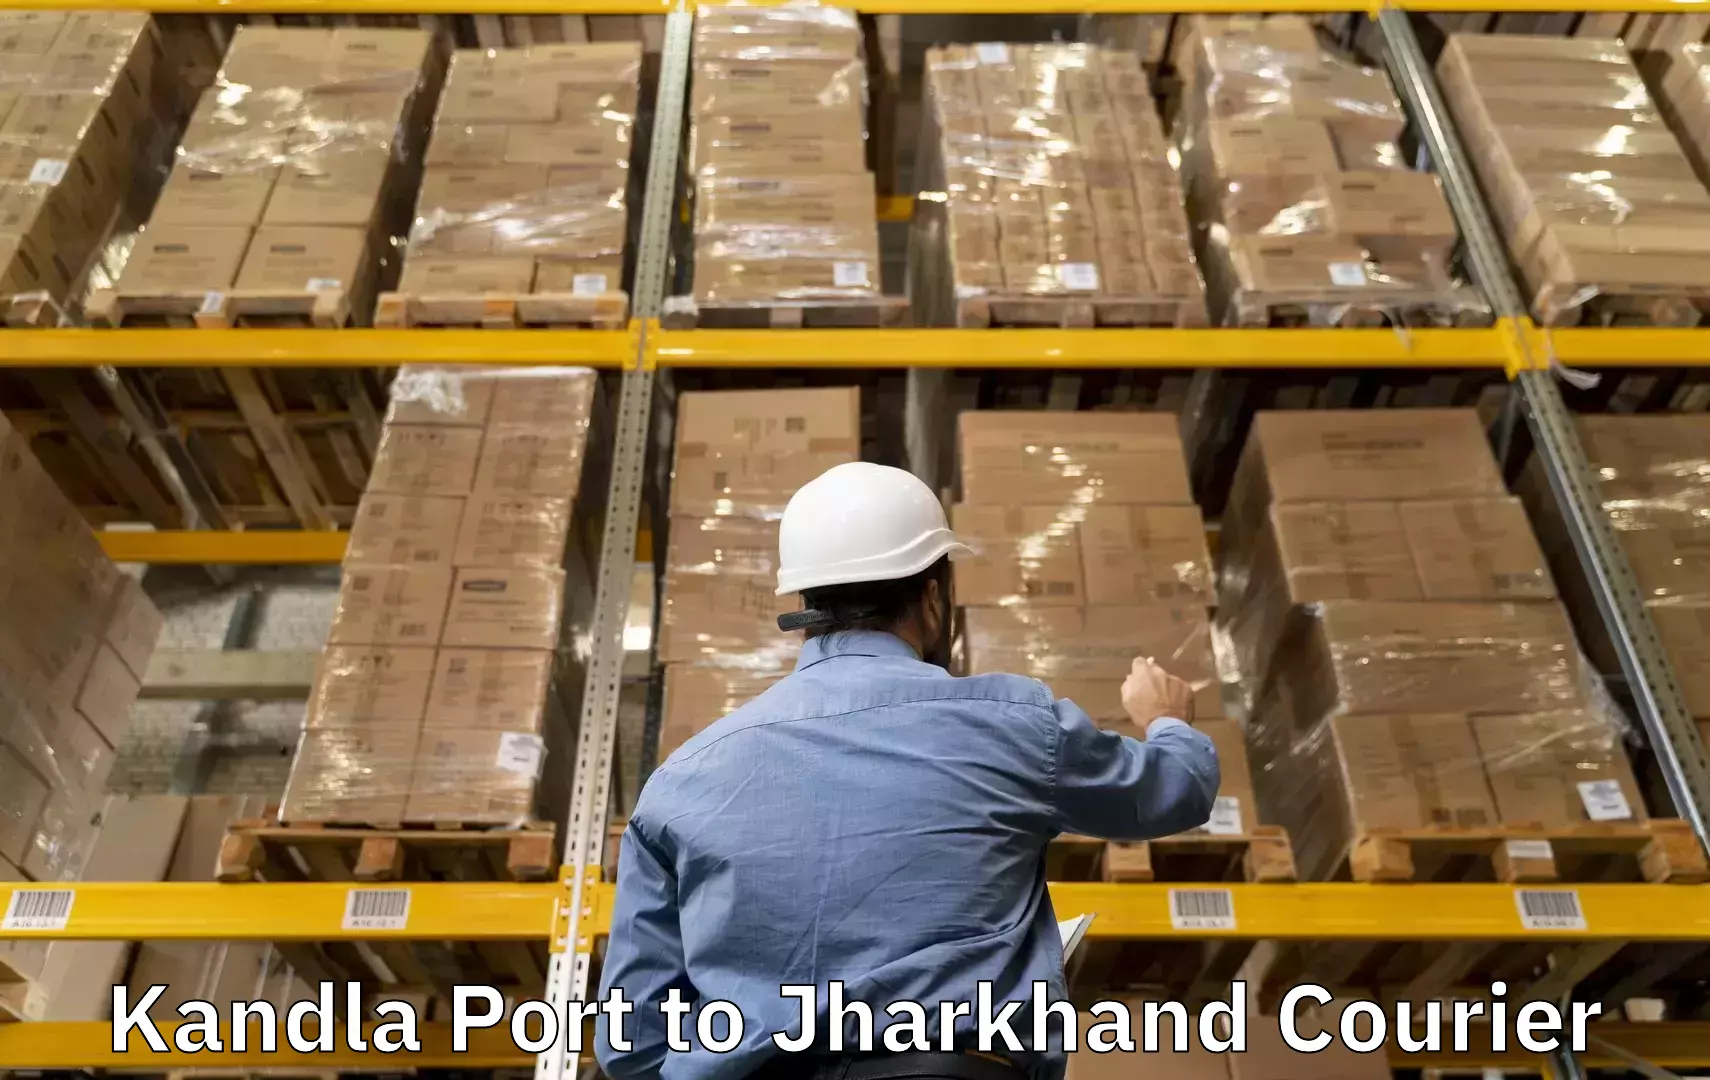 Baggage relocation service Kandla Port to Chandankiyari